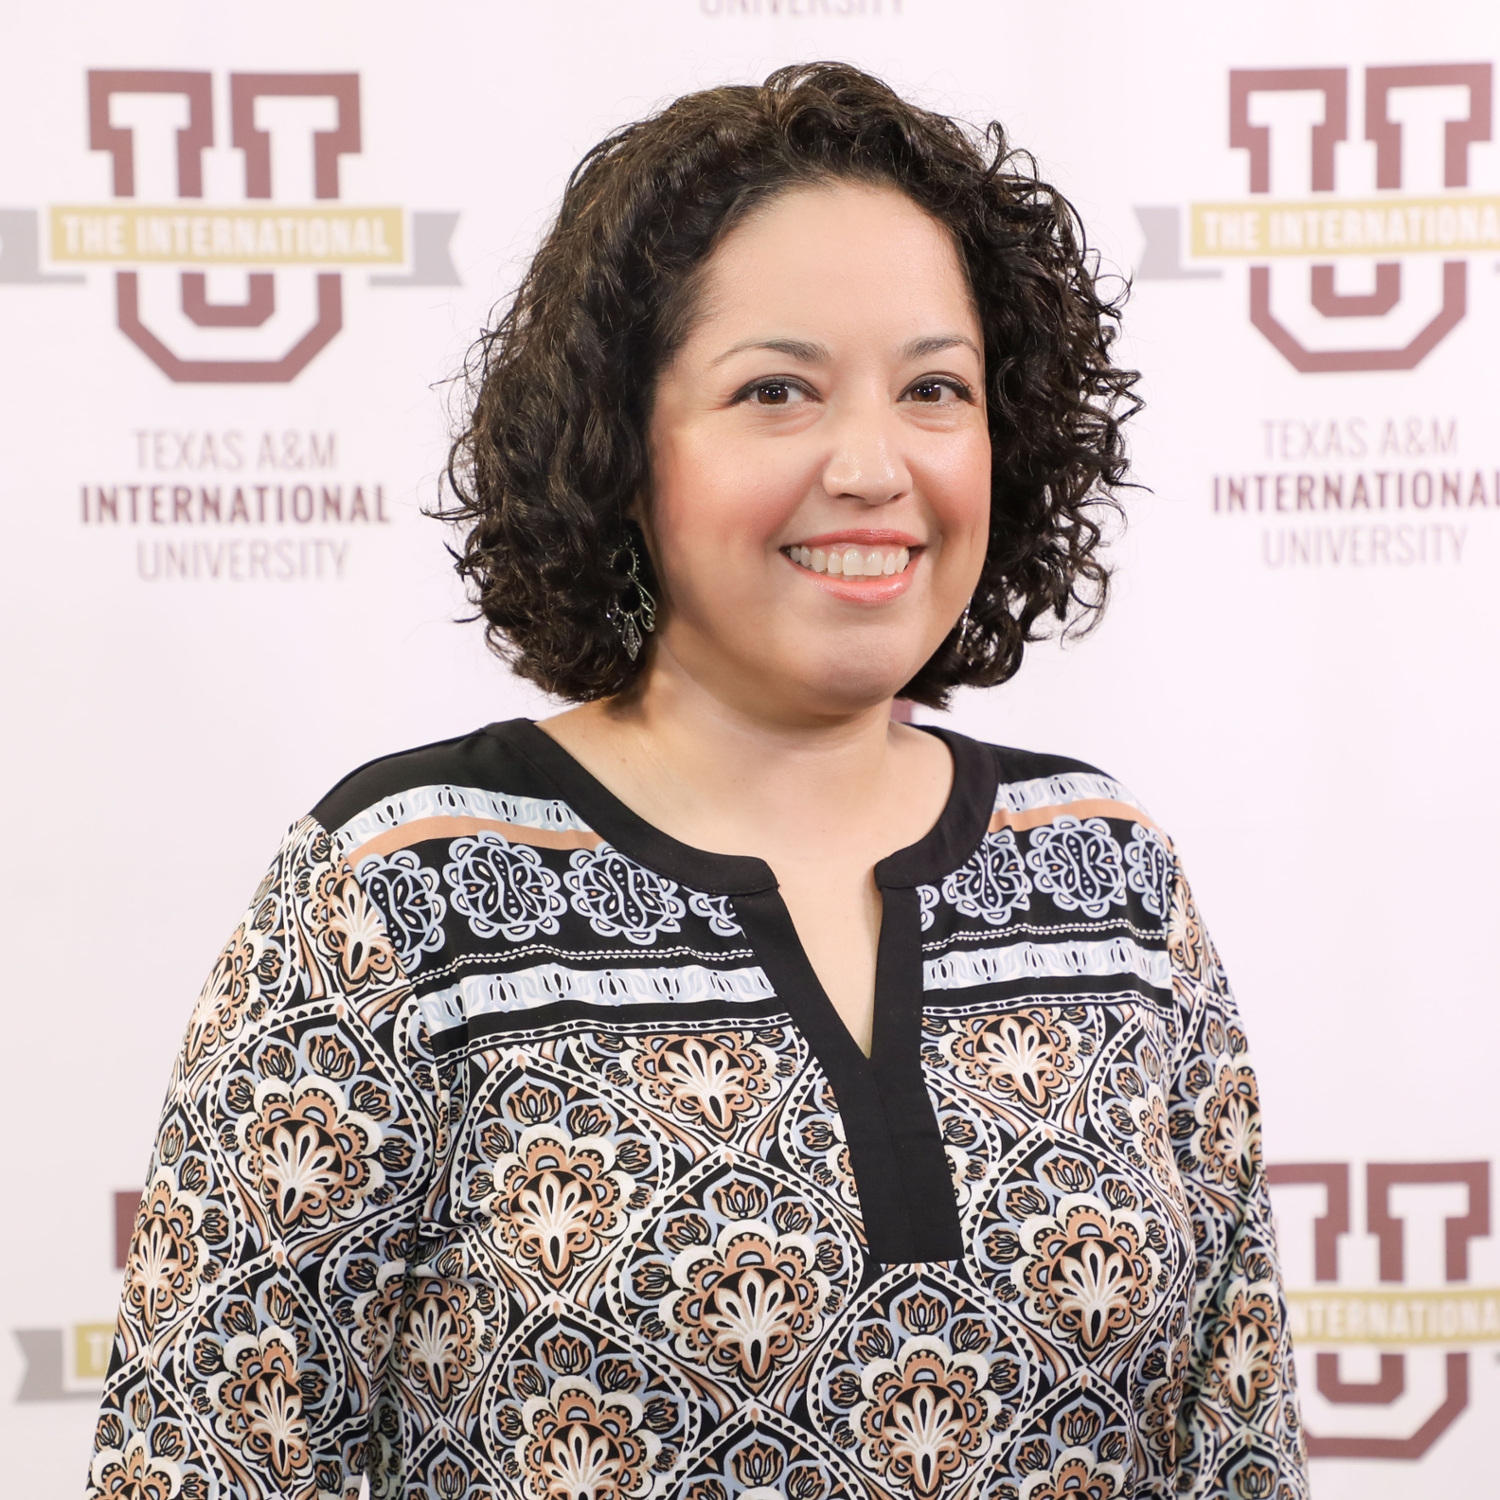 Dr. Adriana Blasco-Rubio